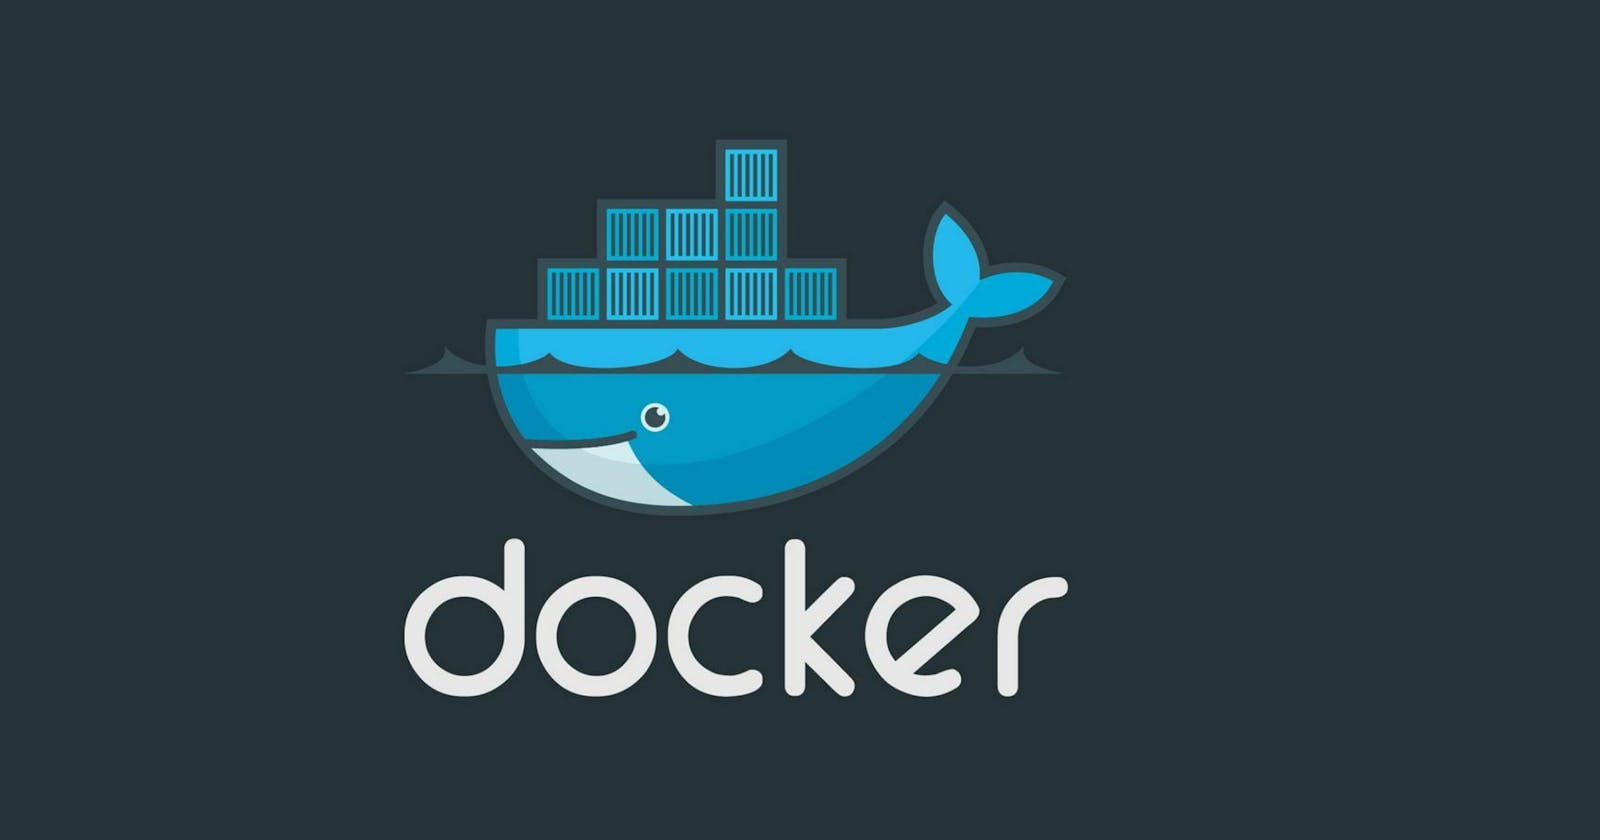 Docker: Part 3 "Docker compose"